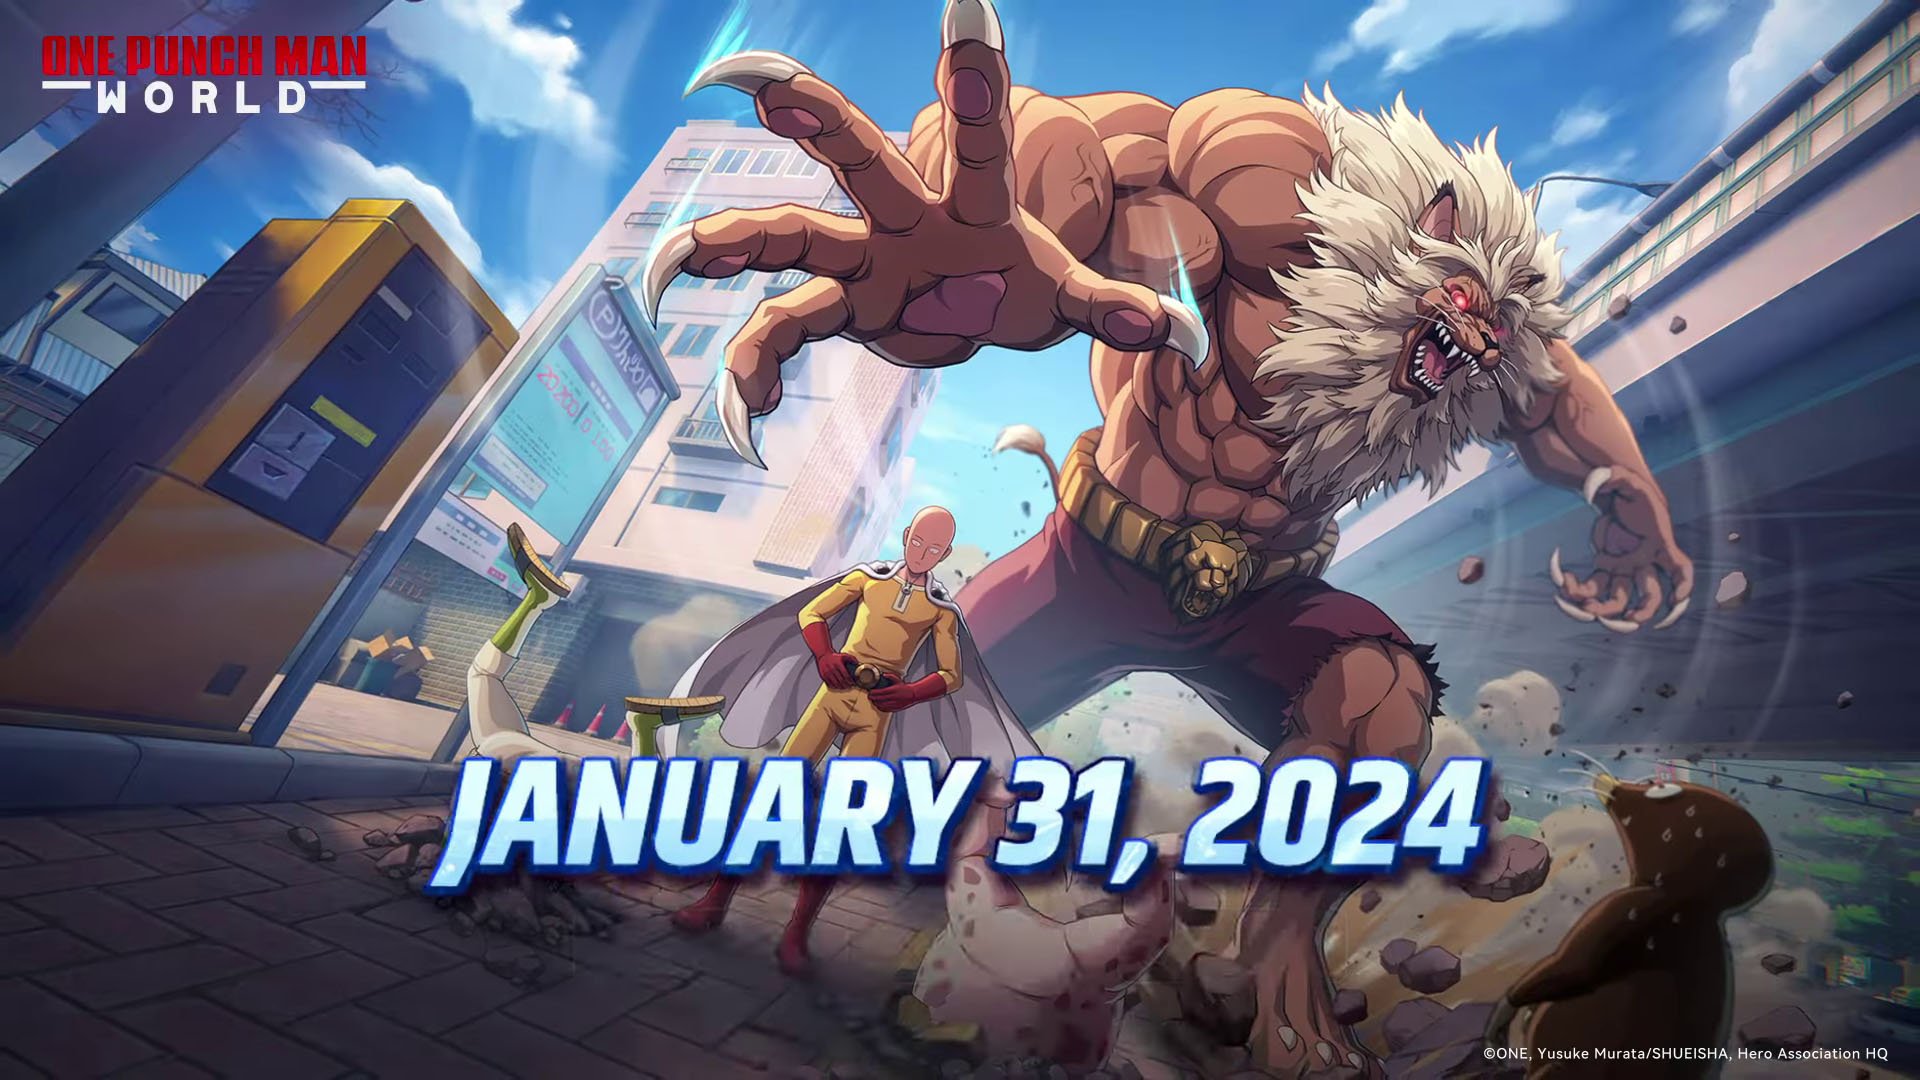 One Punch Man: World launches January 31, 2024 - Gematsu